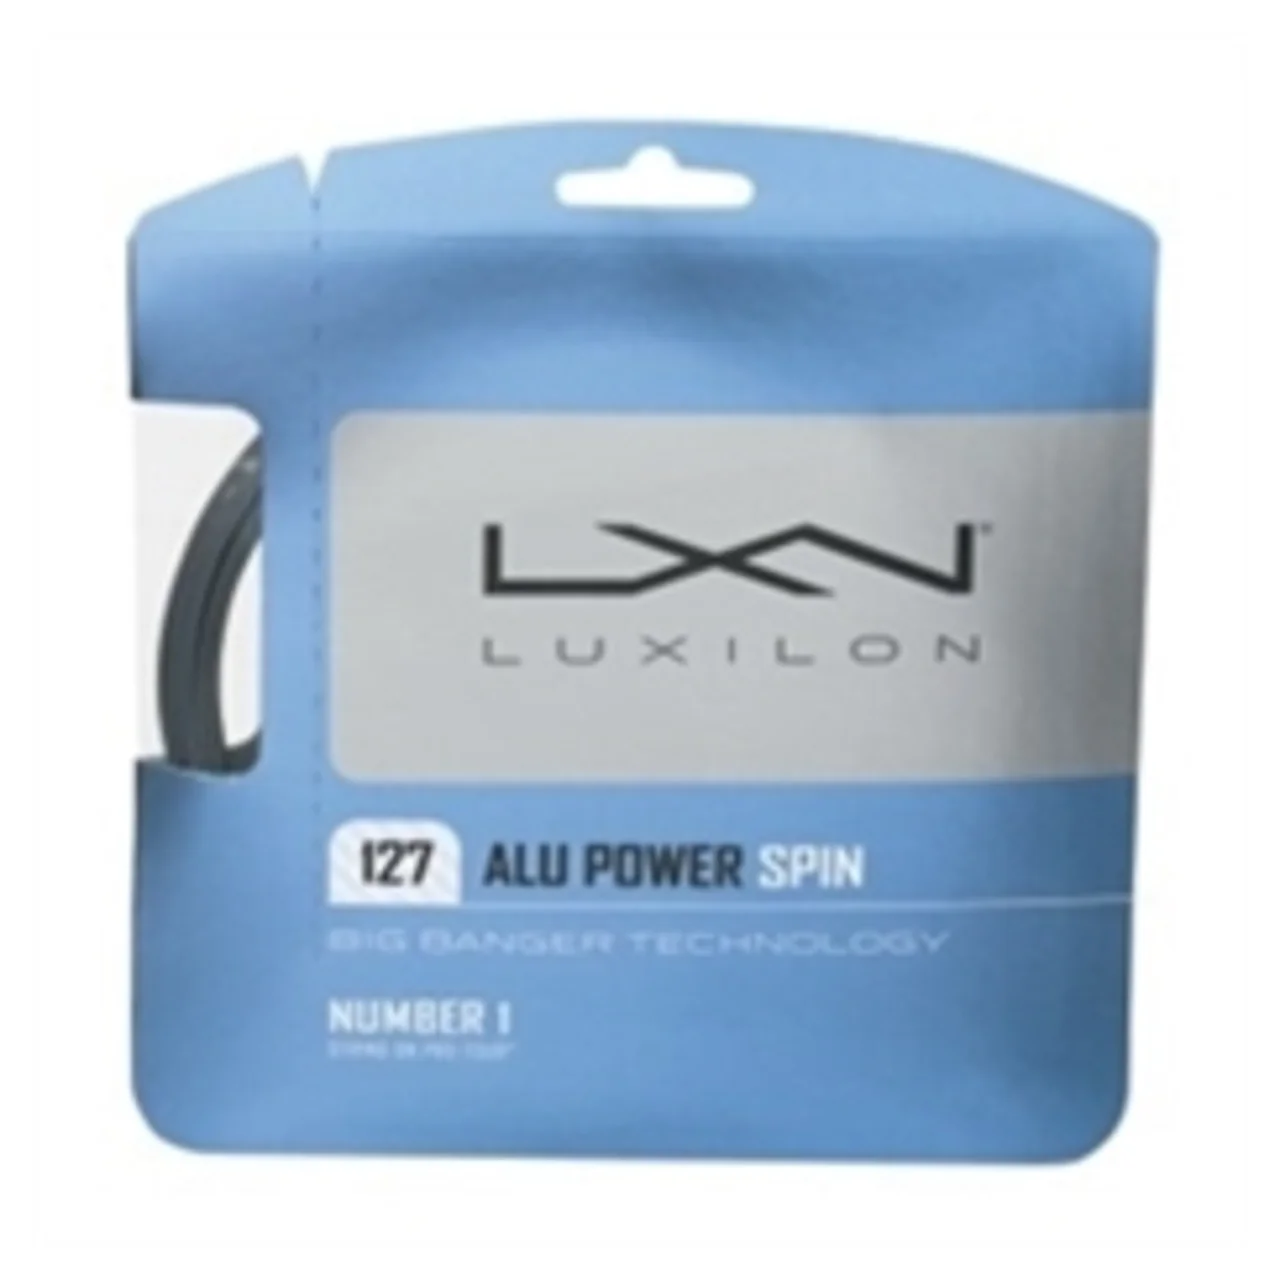 Luxilon Alu Power Spin Set